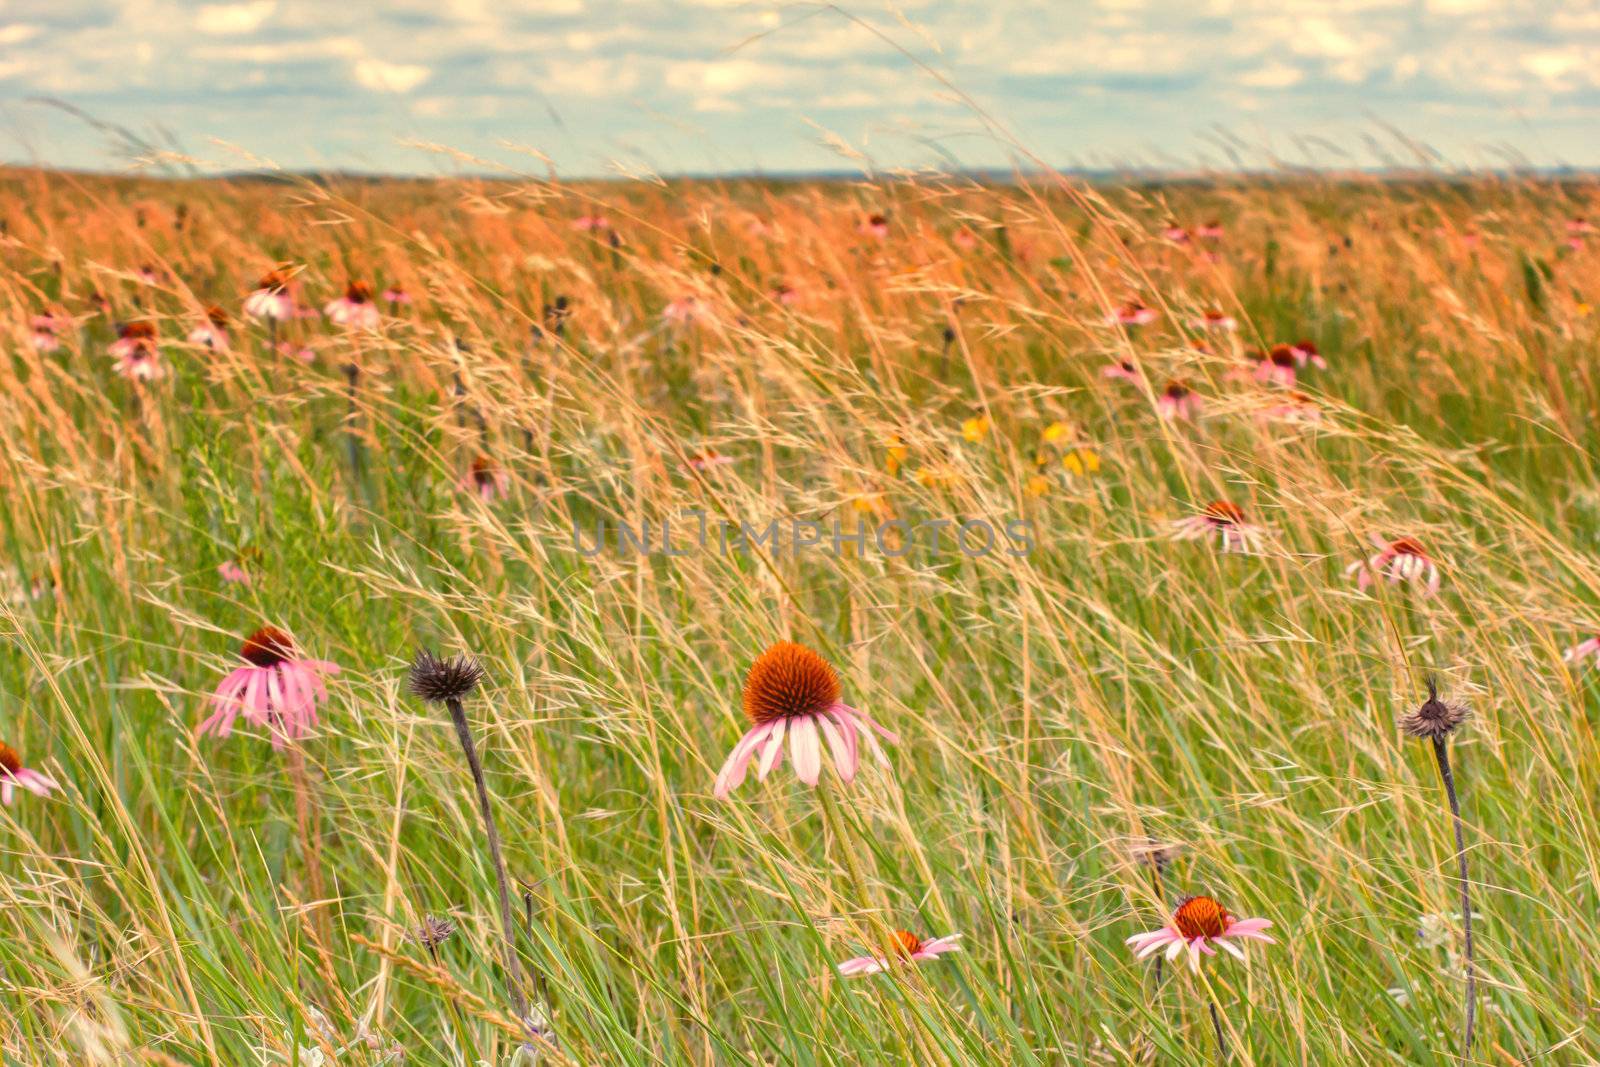 Buffalo Gap National Grasslands is in Western South Dakota near the Badlands and Black Hills